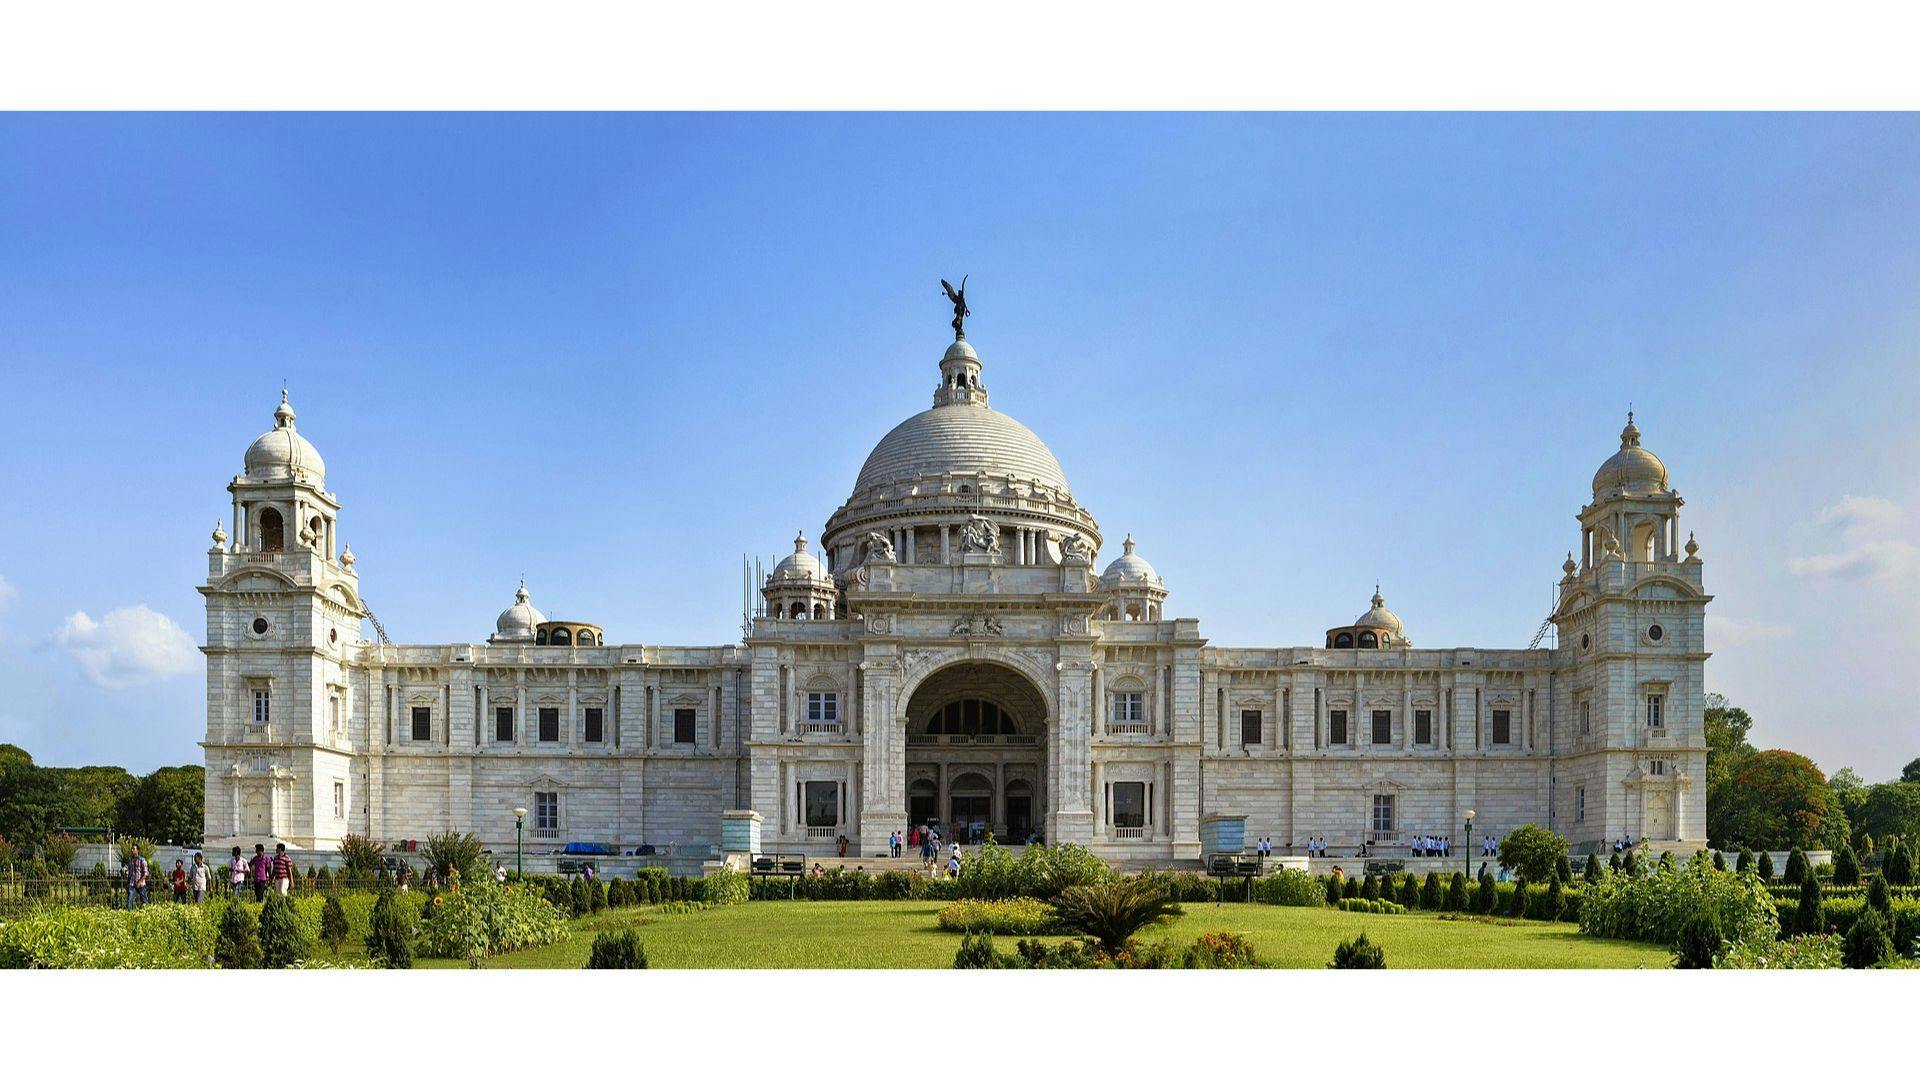 Victoria Memorial situated in Kolkata | Wikimedia Commons